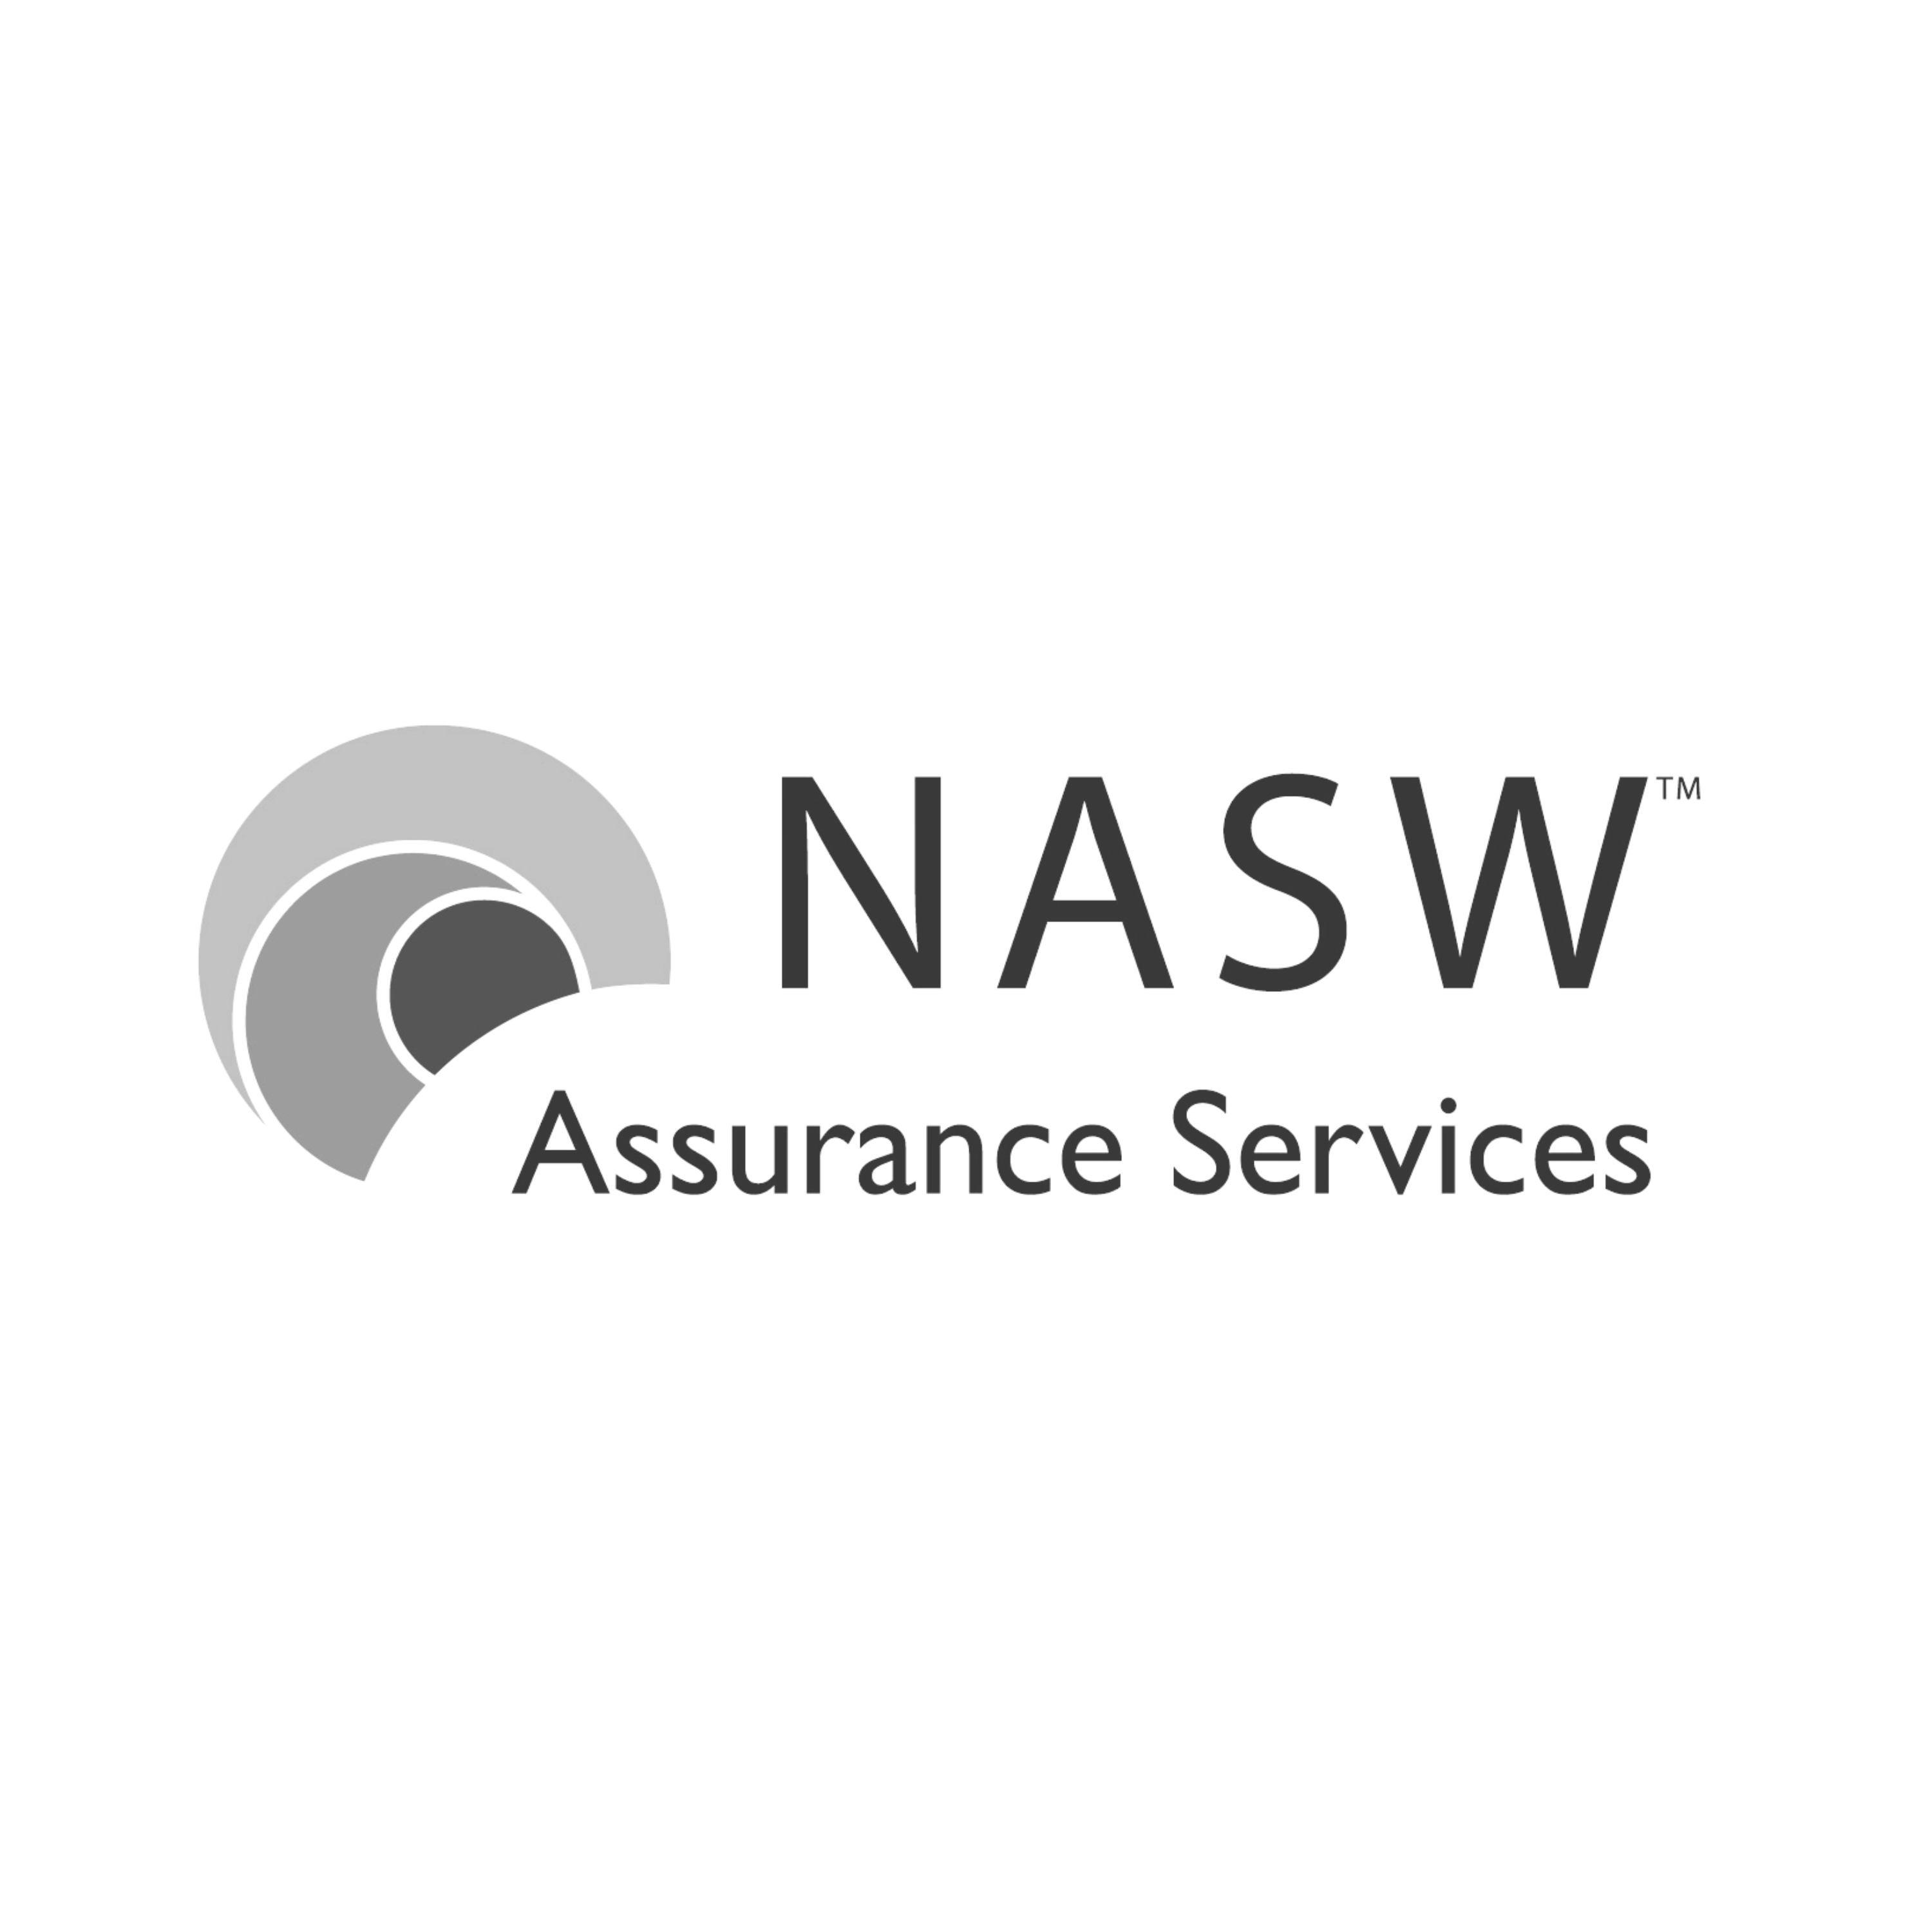 NASW Assurance Service BW